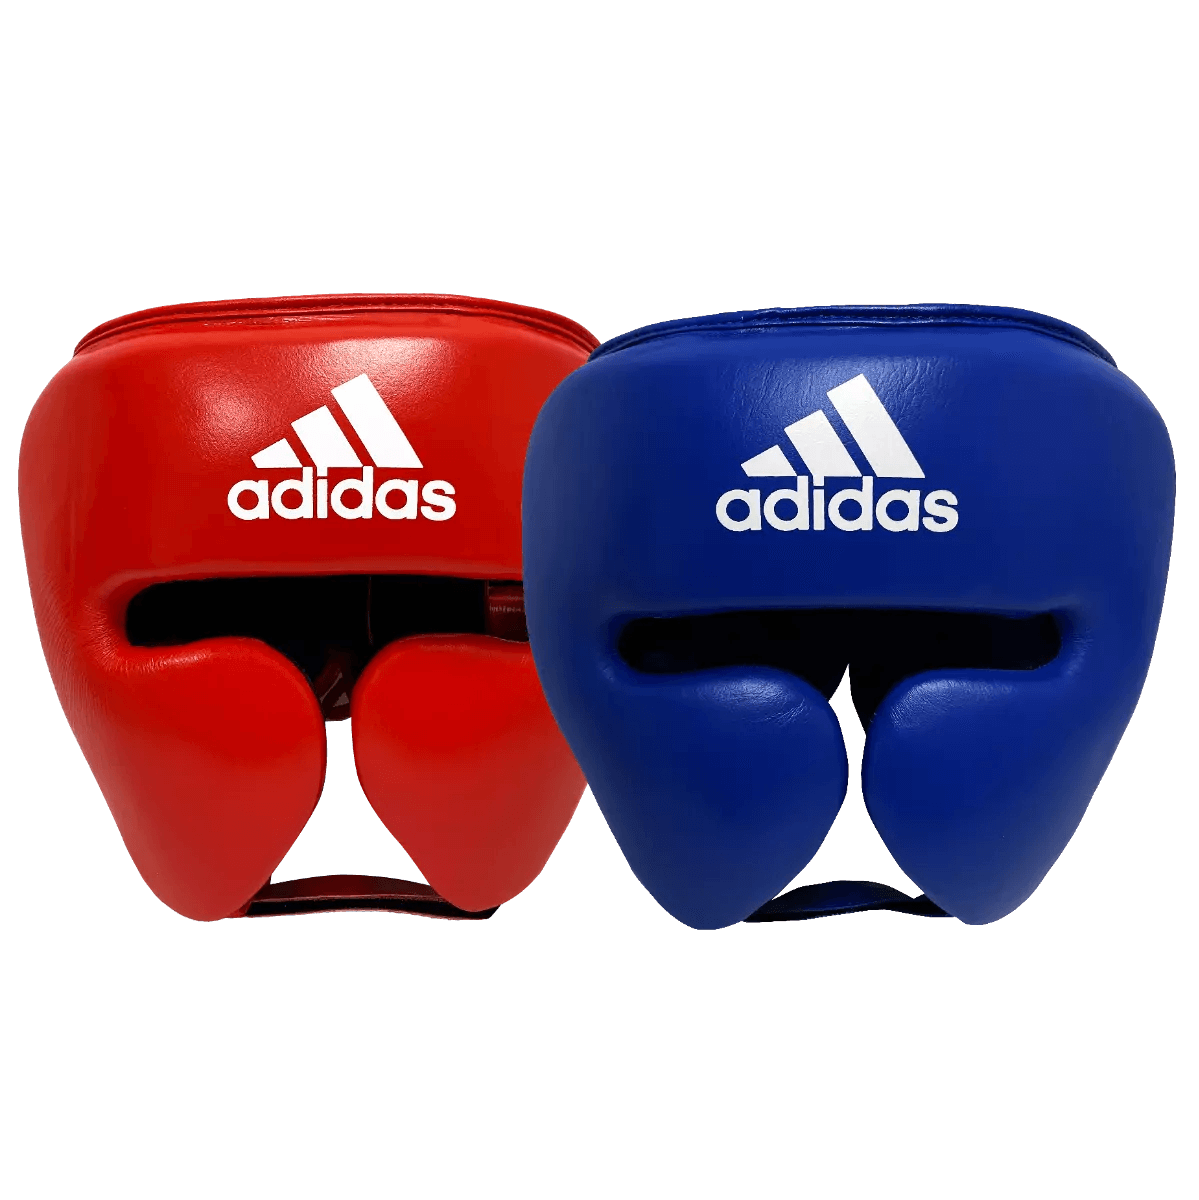 adidas Adistar Pro Boxing Head Guard Leather Breathable